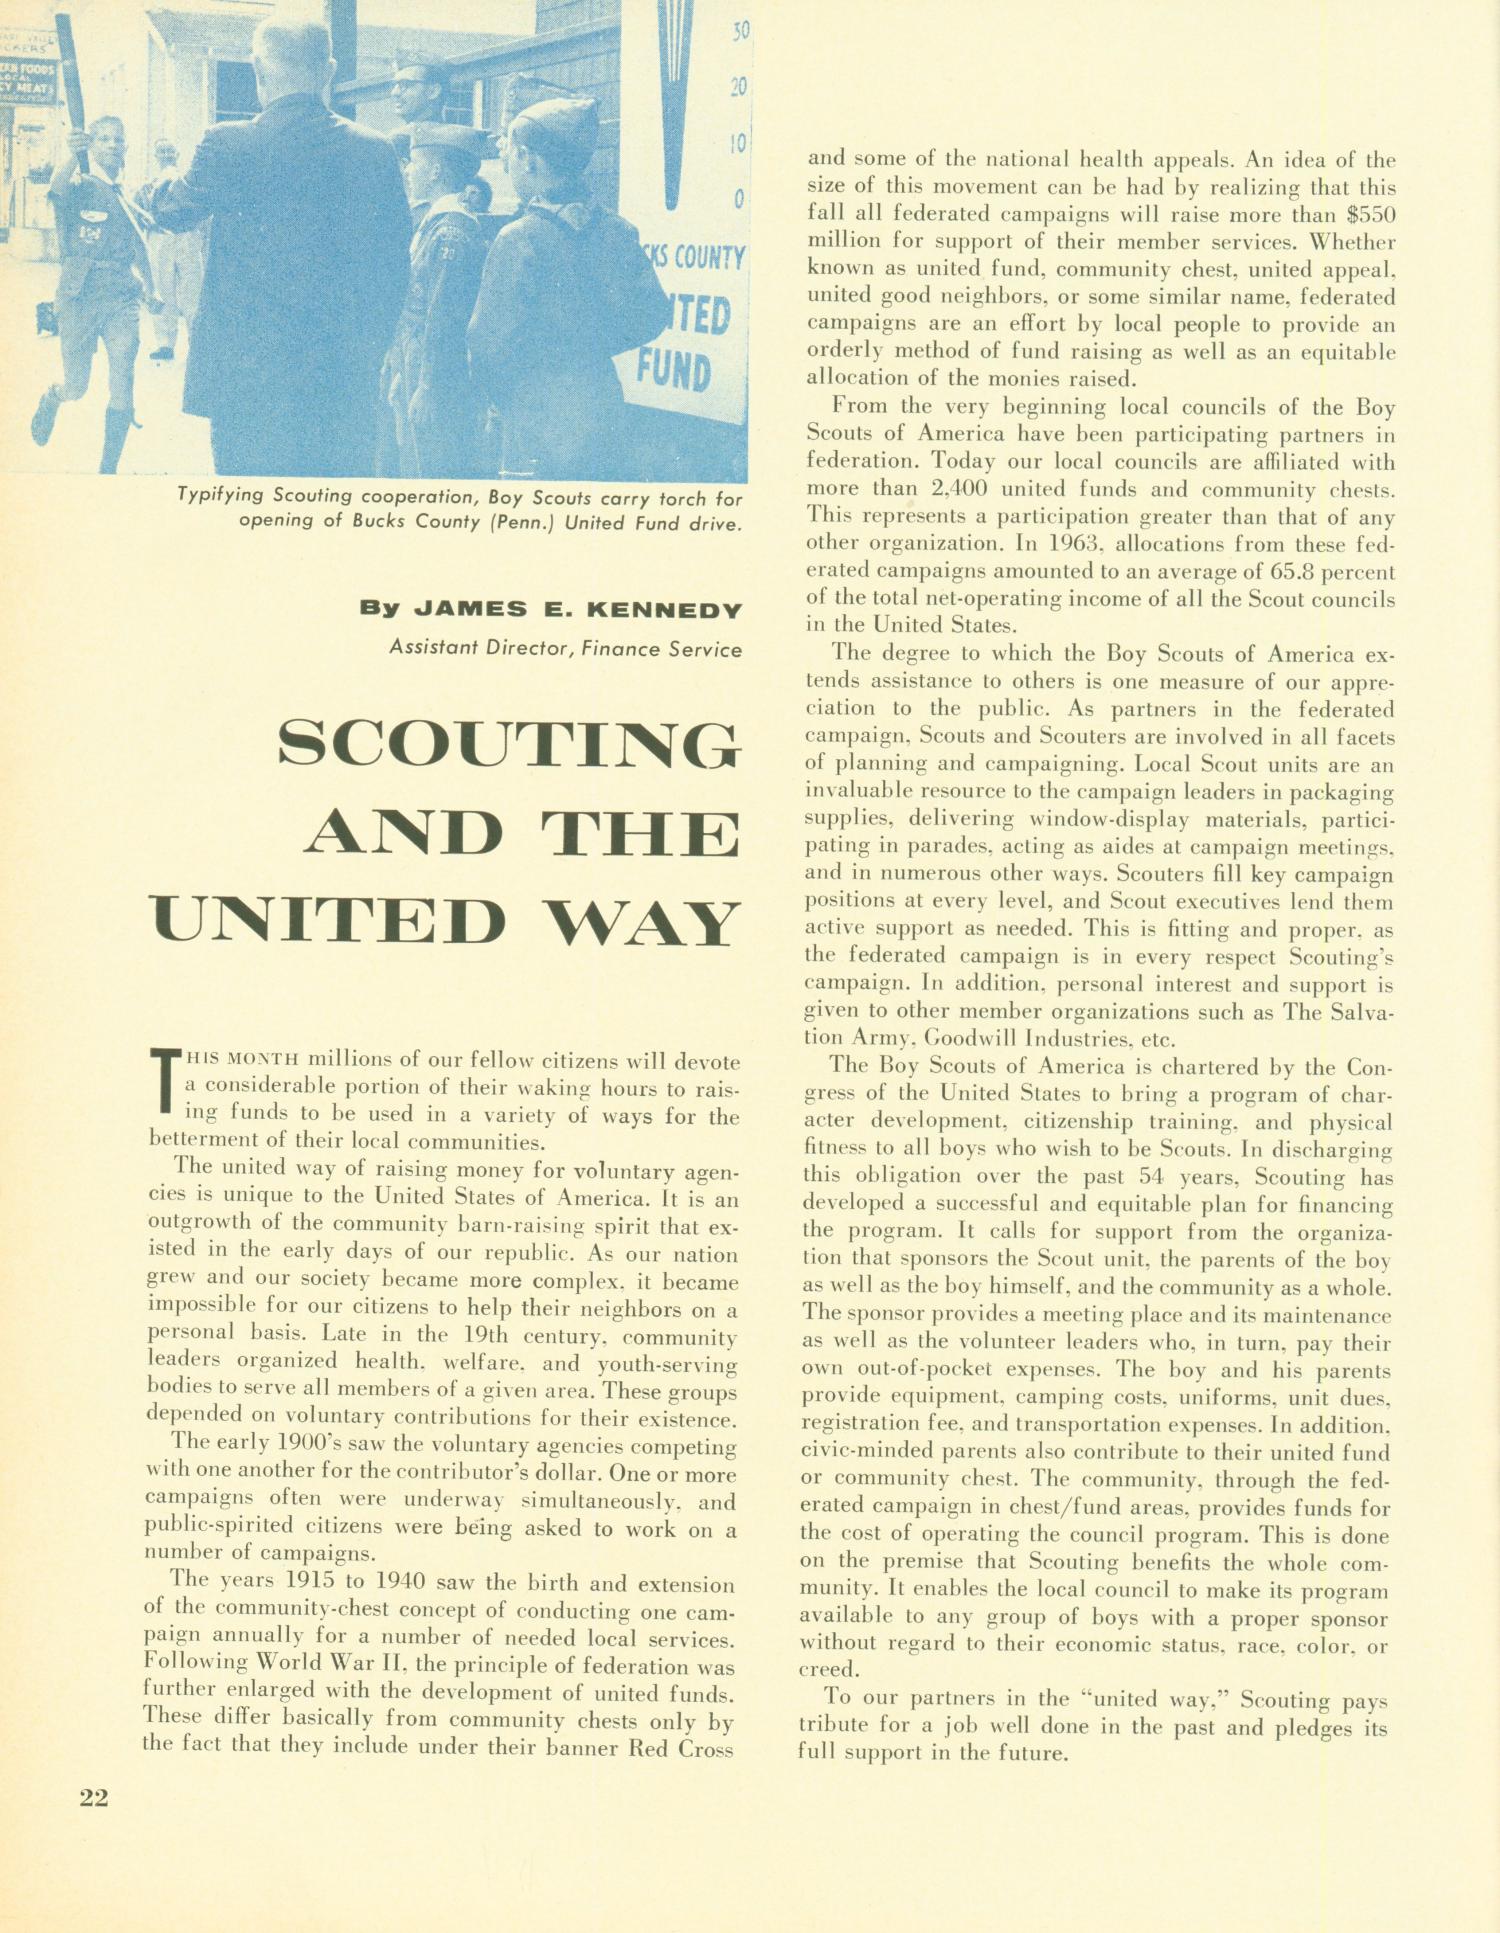 Scouting, Volume 52, Number 8, October 1964
                                                
                                                    22
                                                